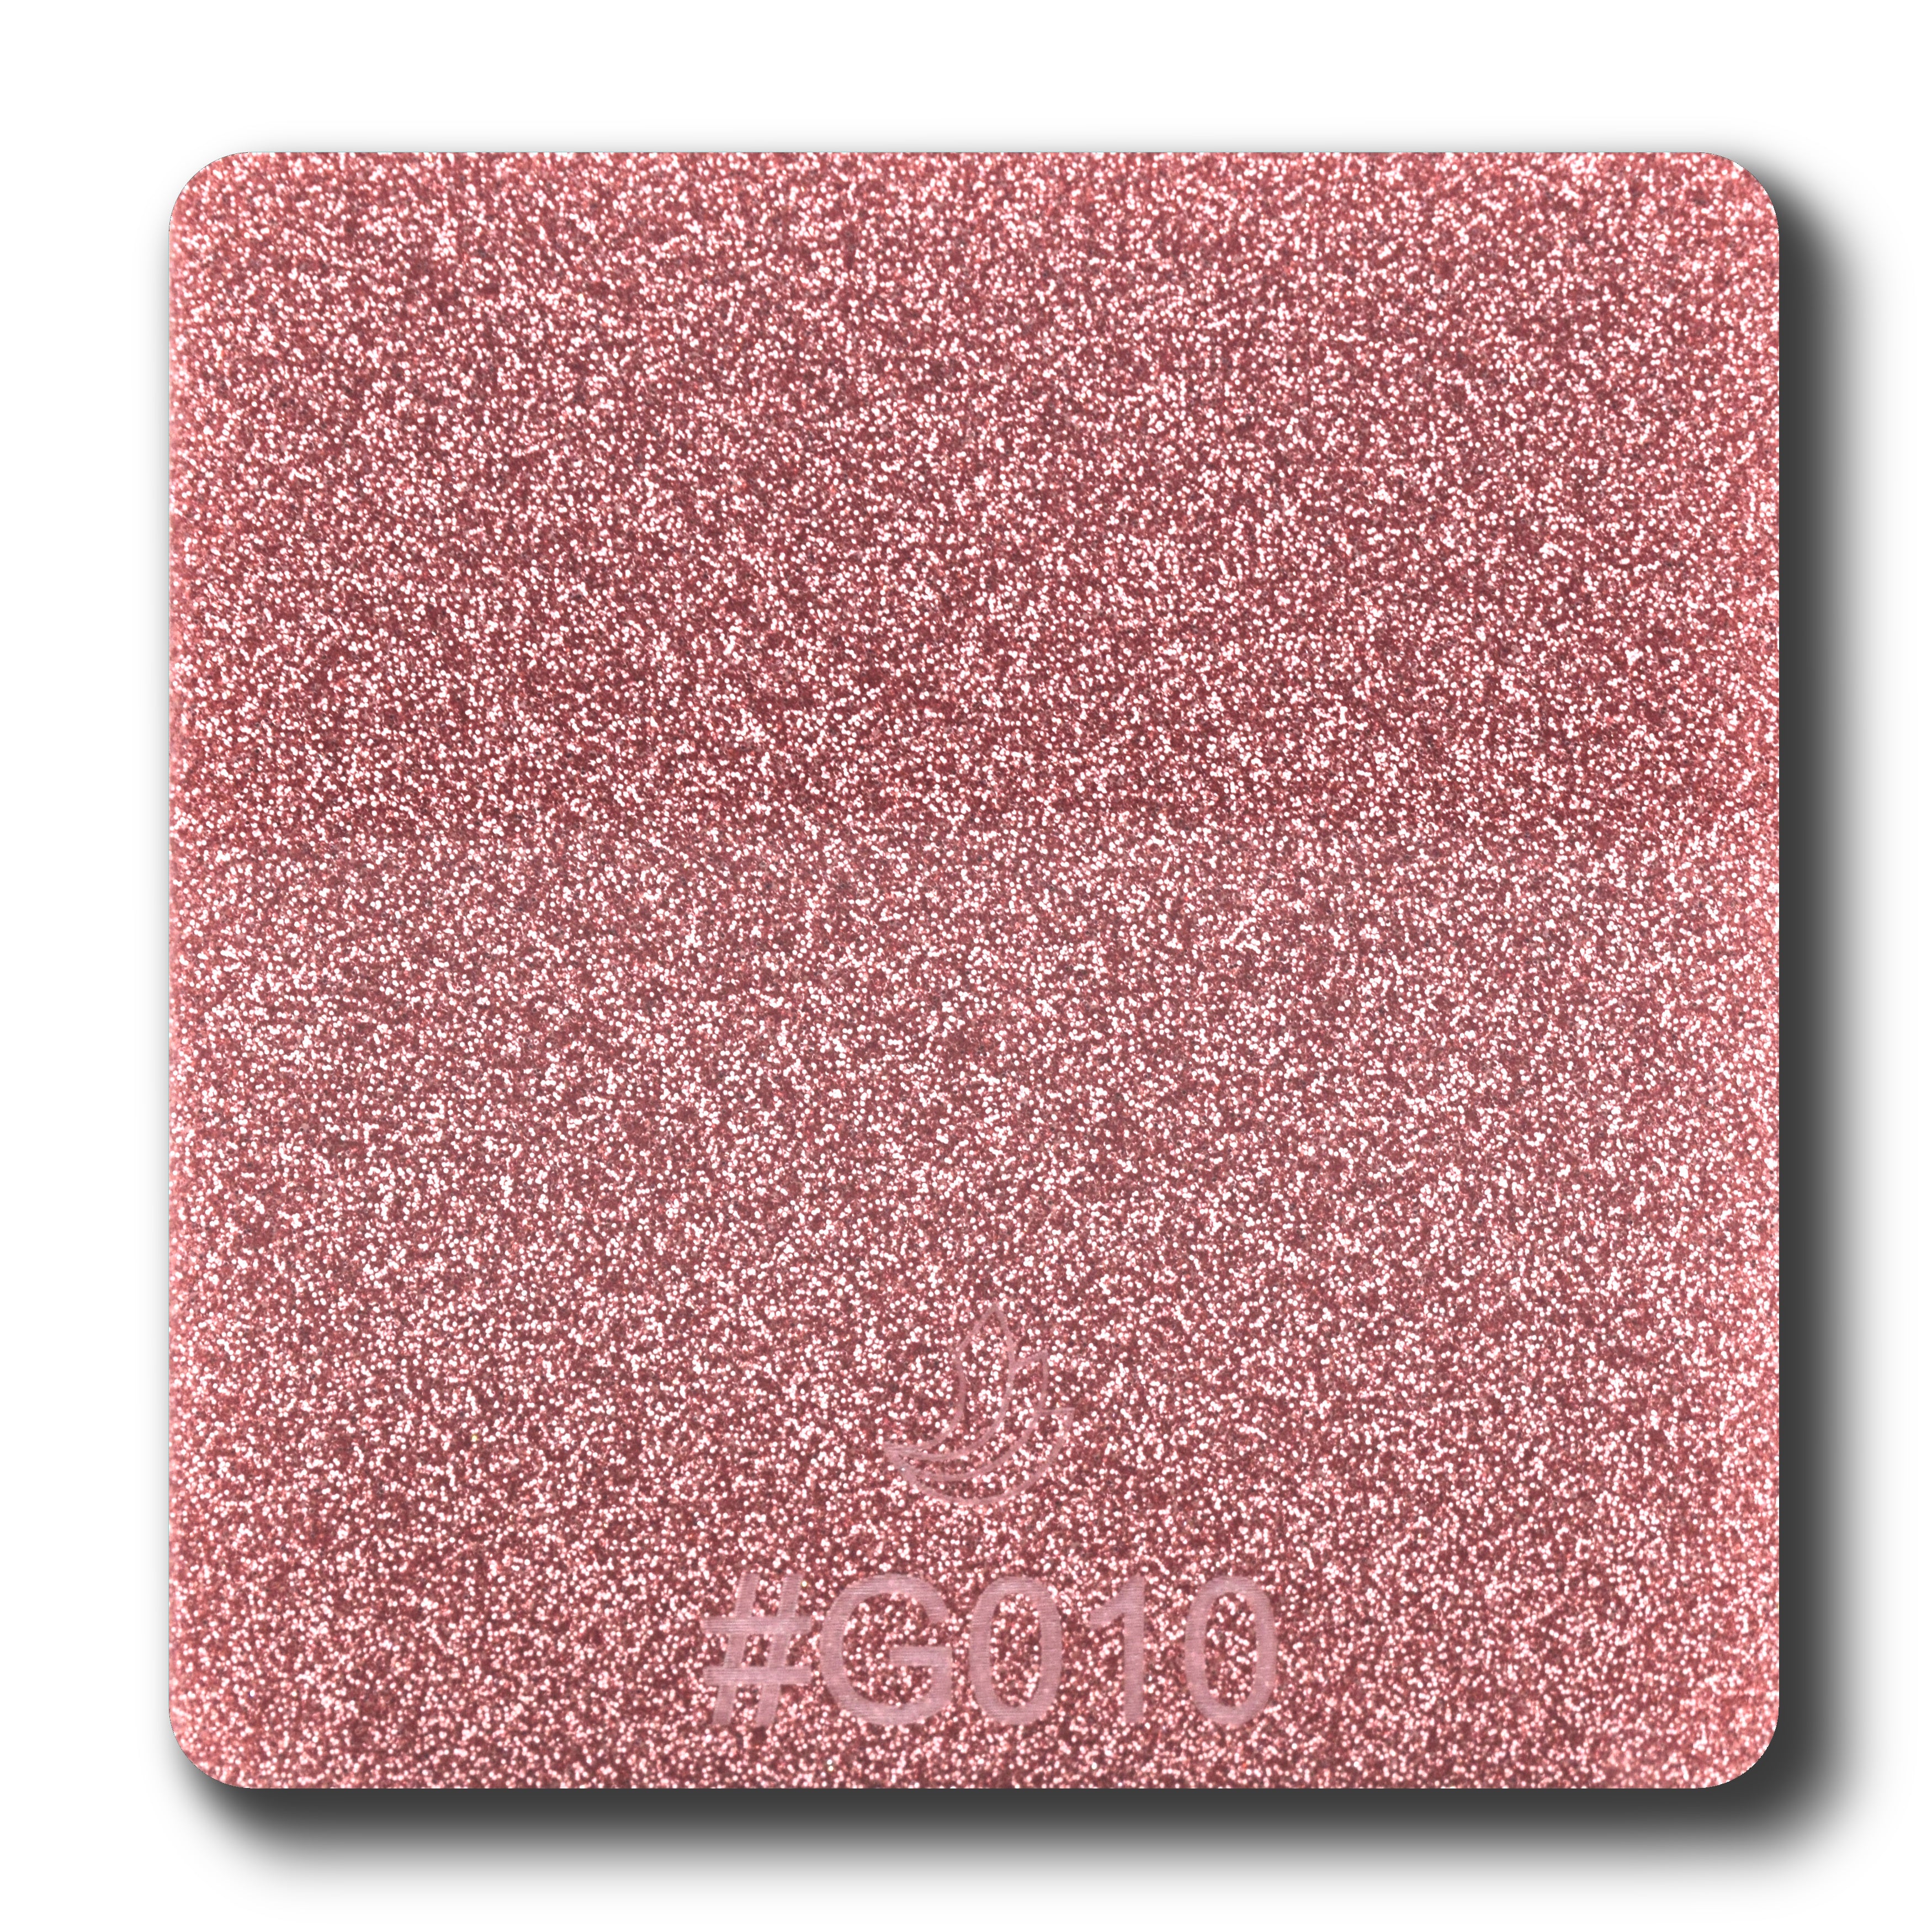 1/8" Pink Glitter Two-Sided Acrylic Sheet